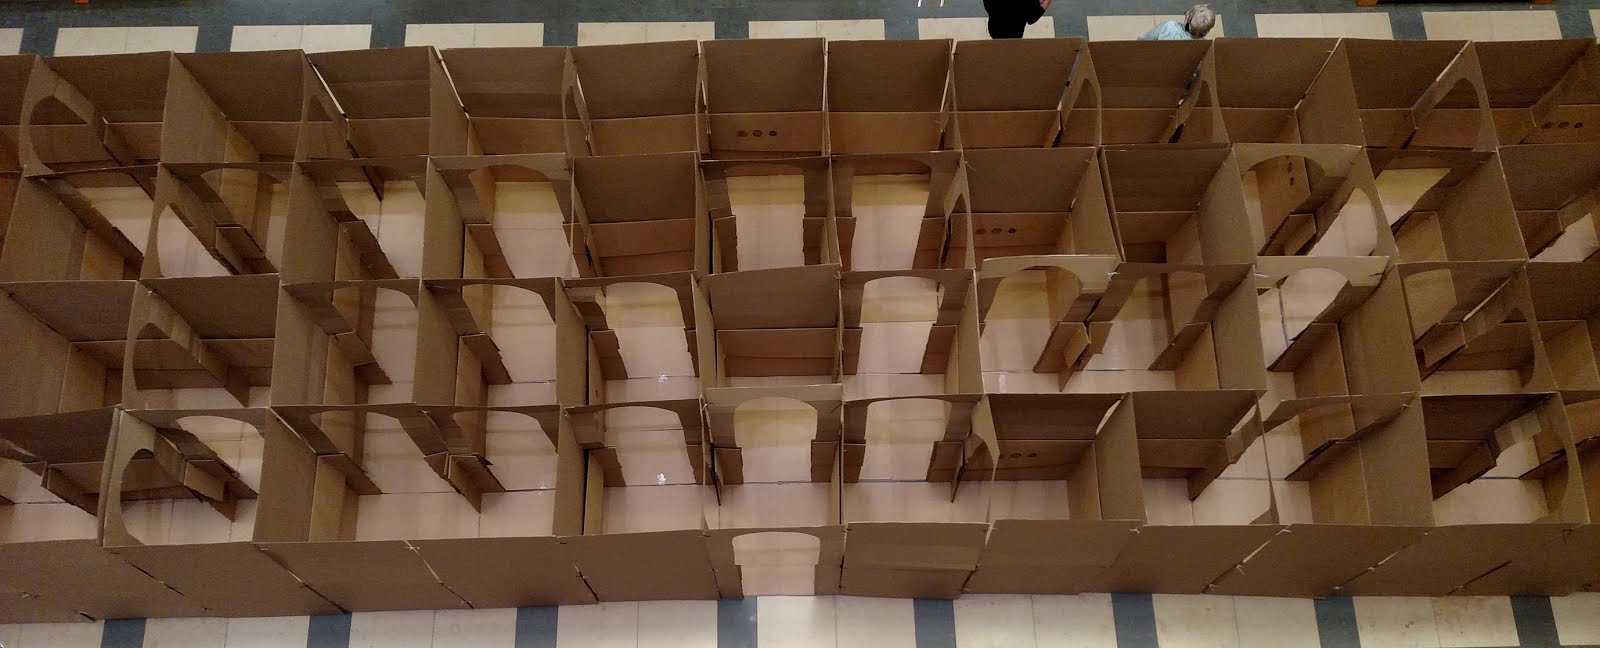 Box Full of Boxes